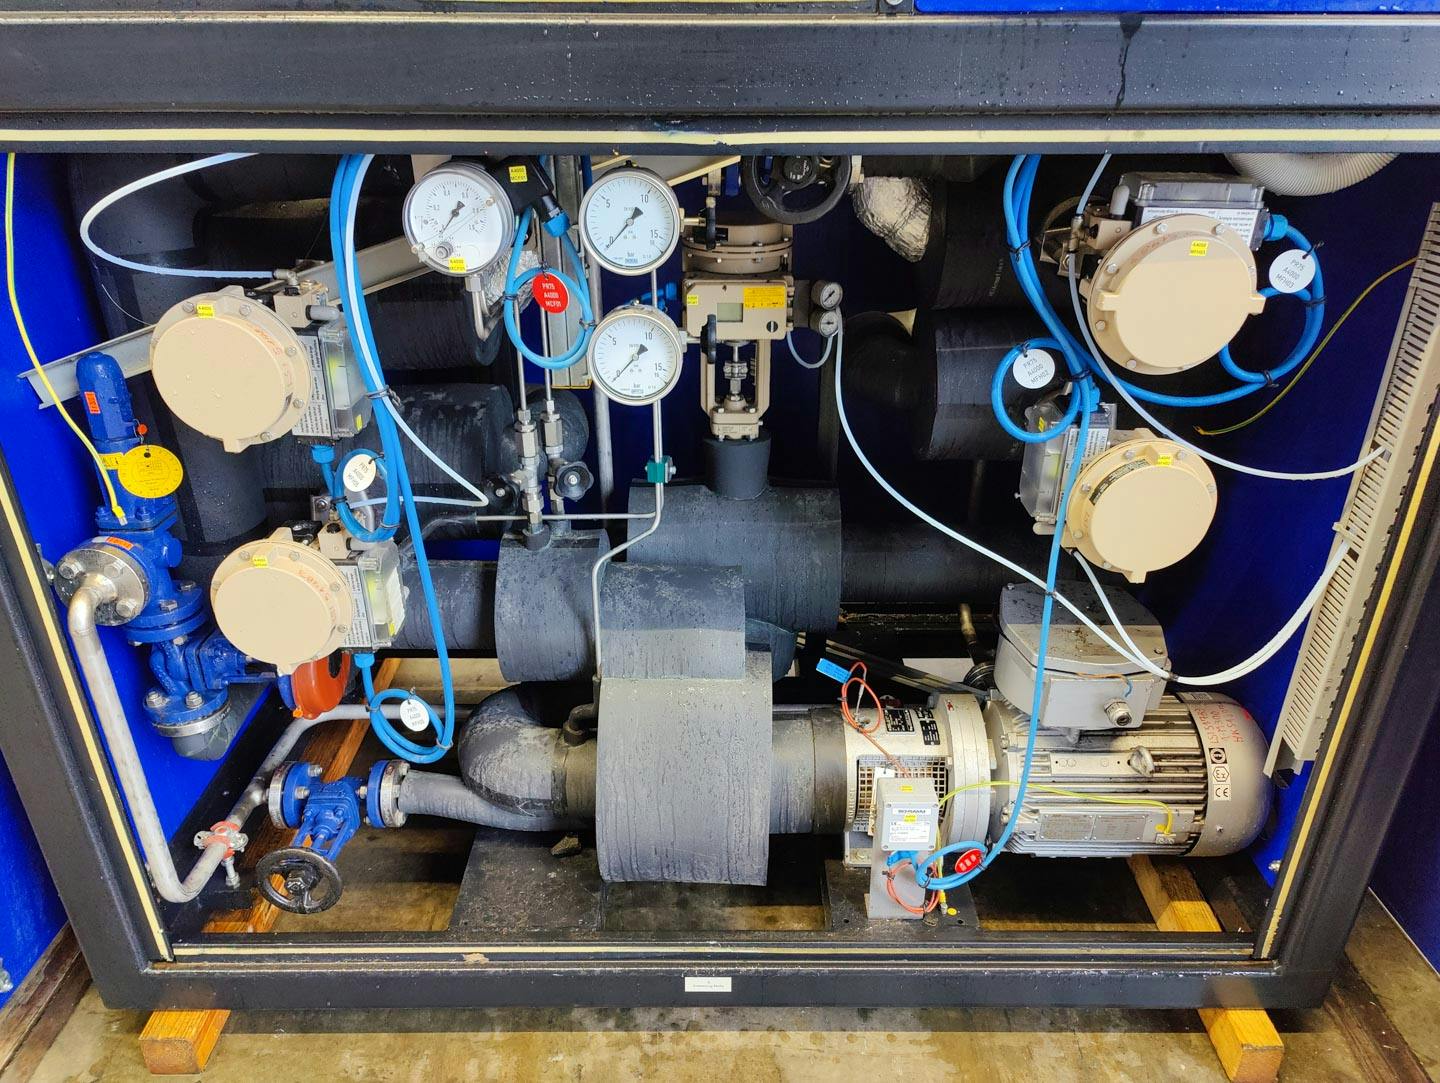 Lauda TR400 HK/KT-EX "secondary circuit system" - Tempereerapparaat - image 6